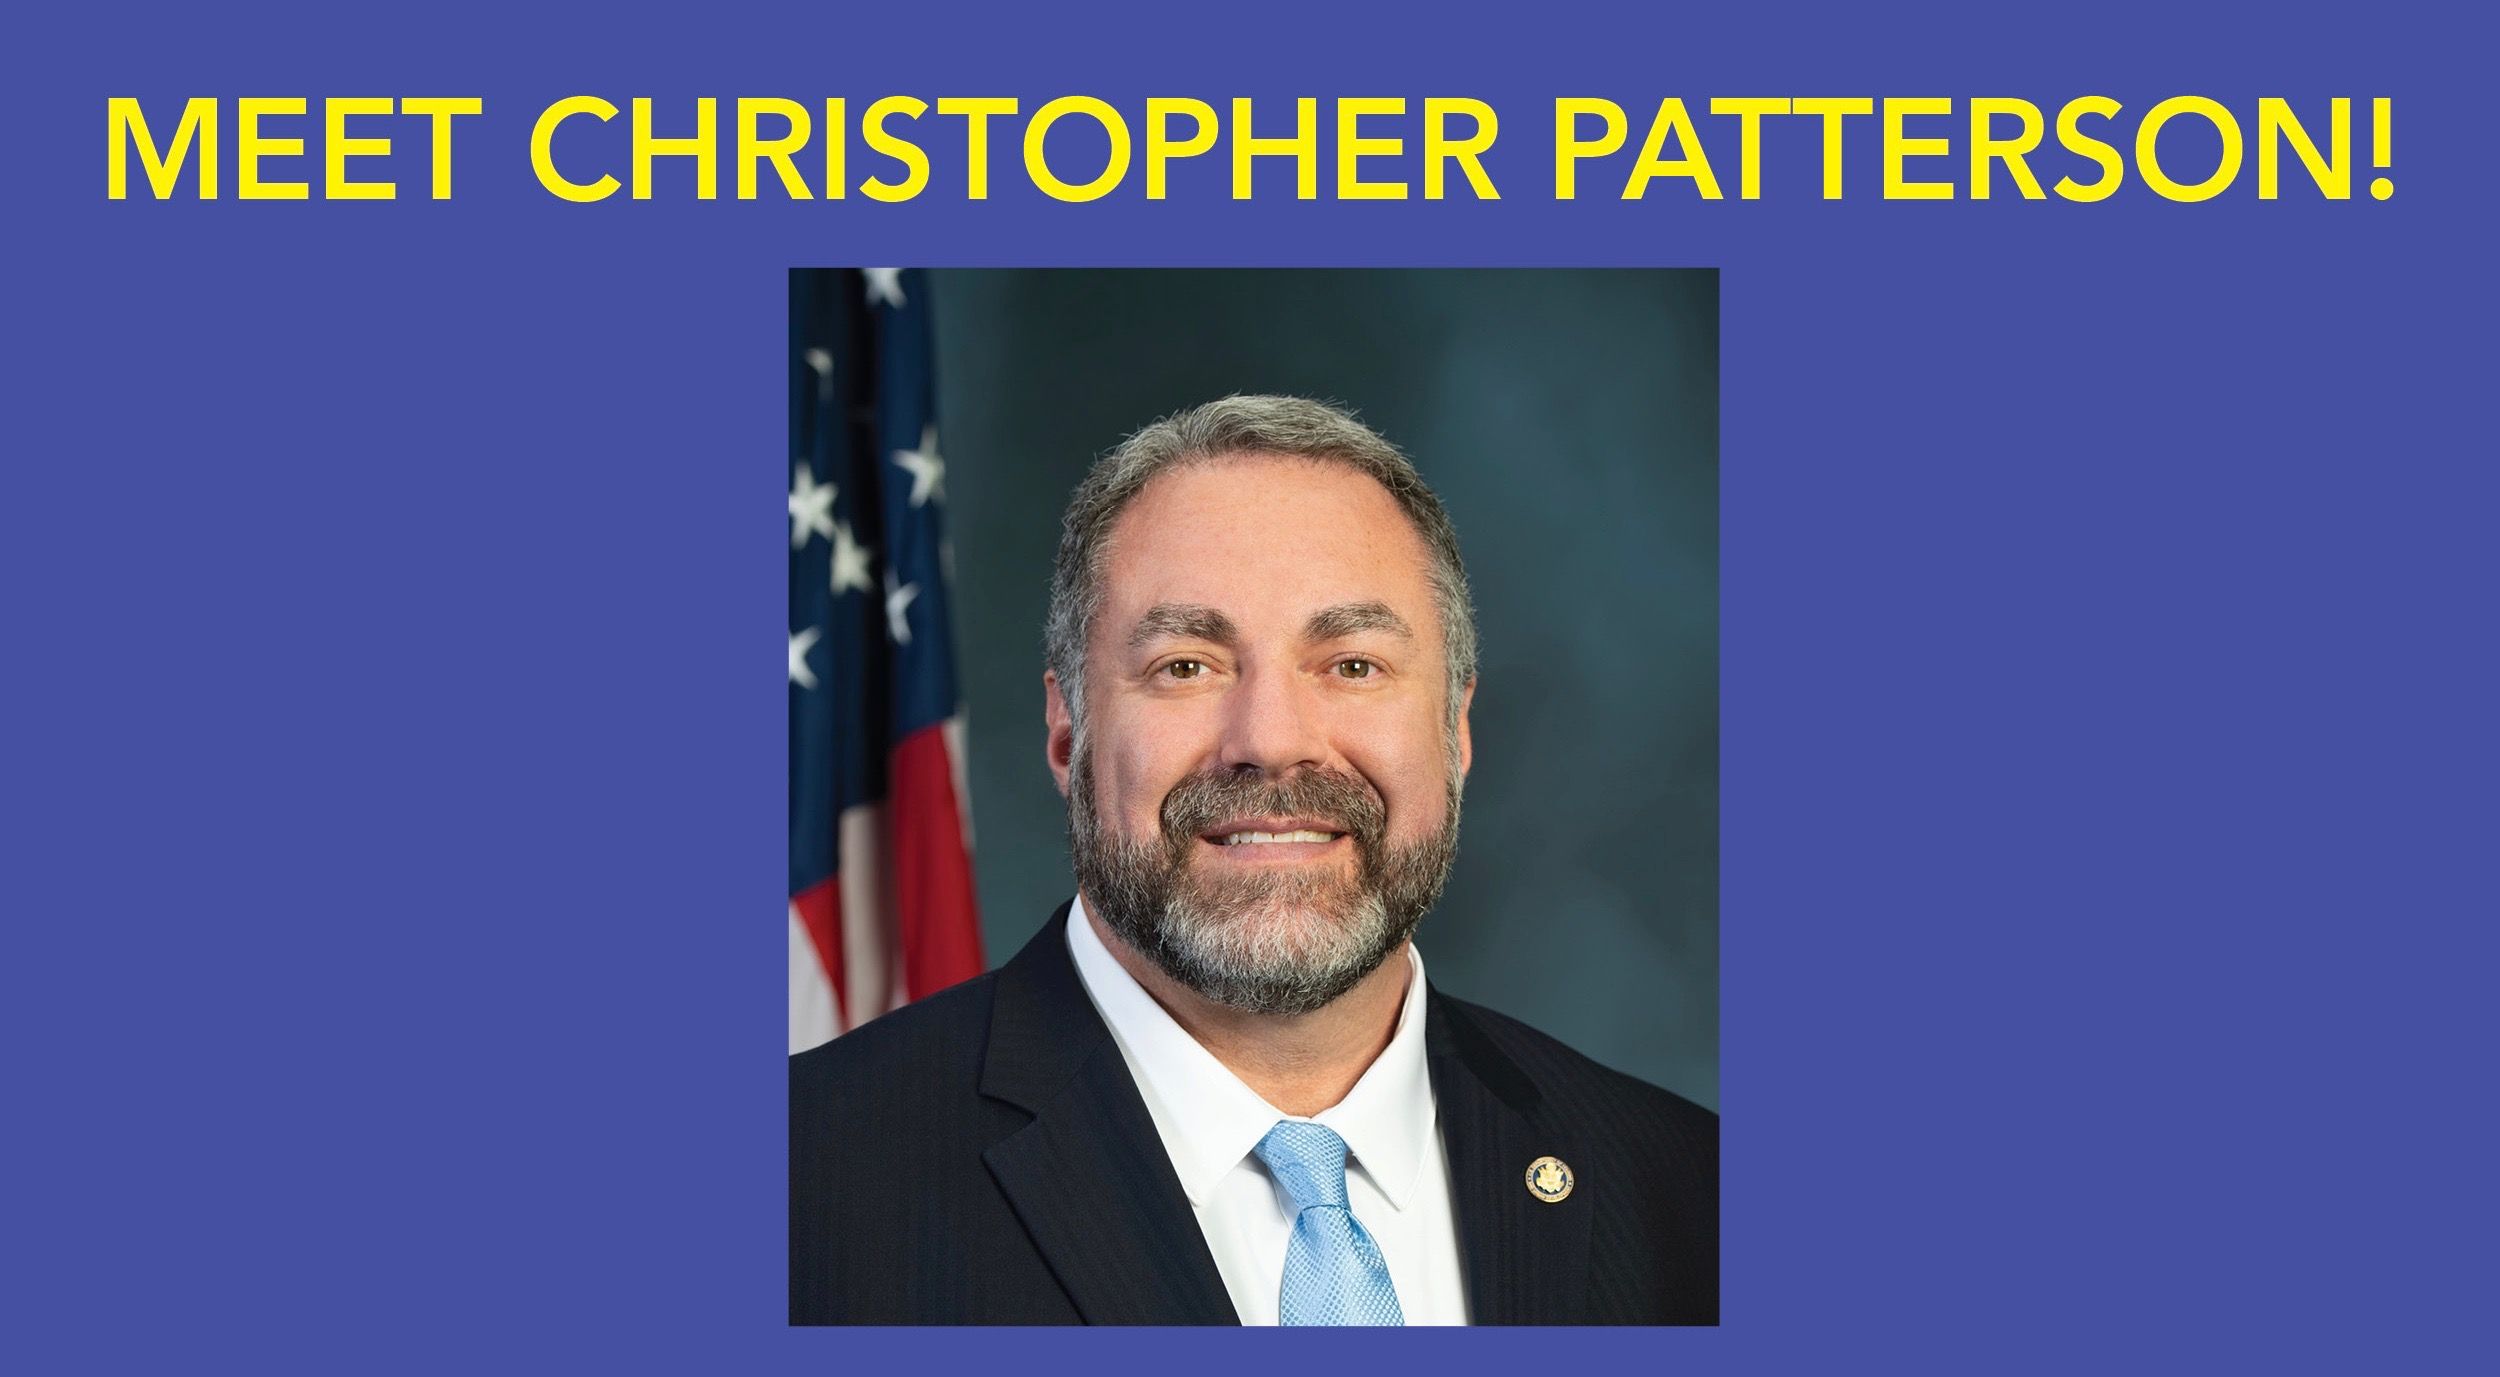 Meet Christopher Patterson